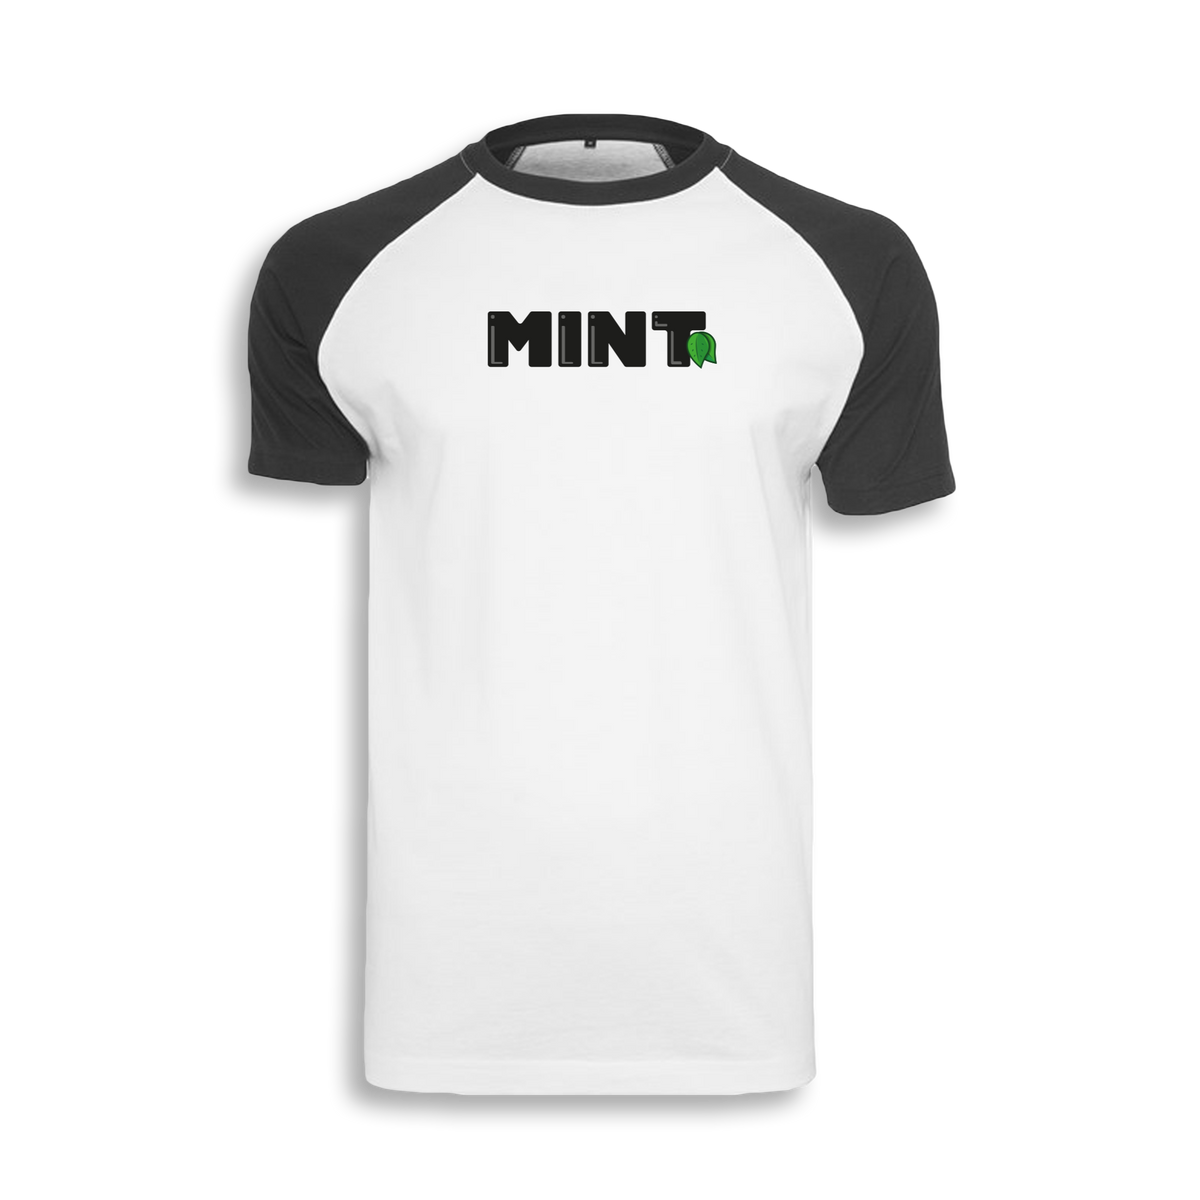 BeeManc Mint T-Shirt - White/Black